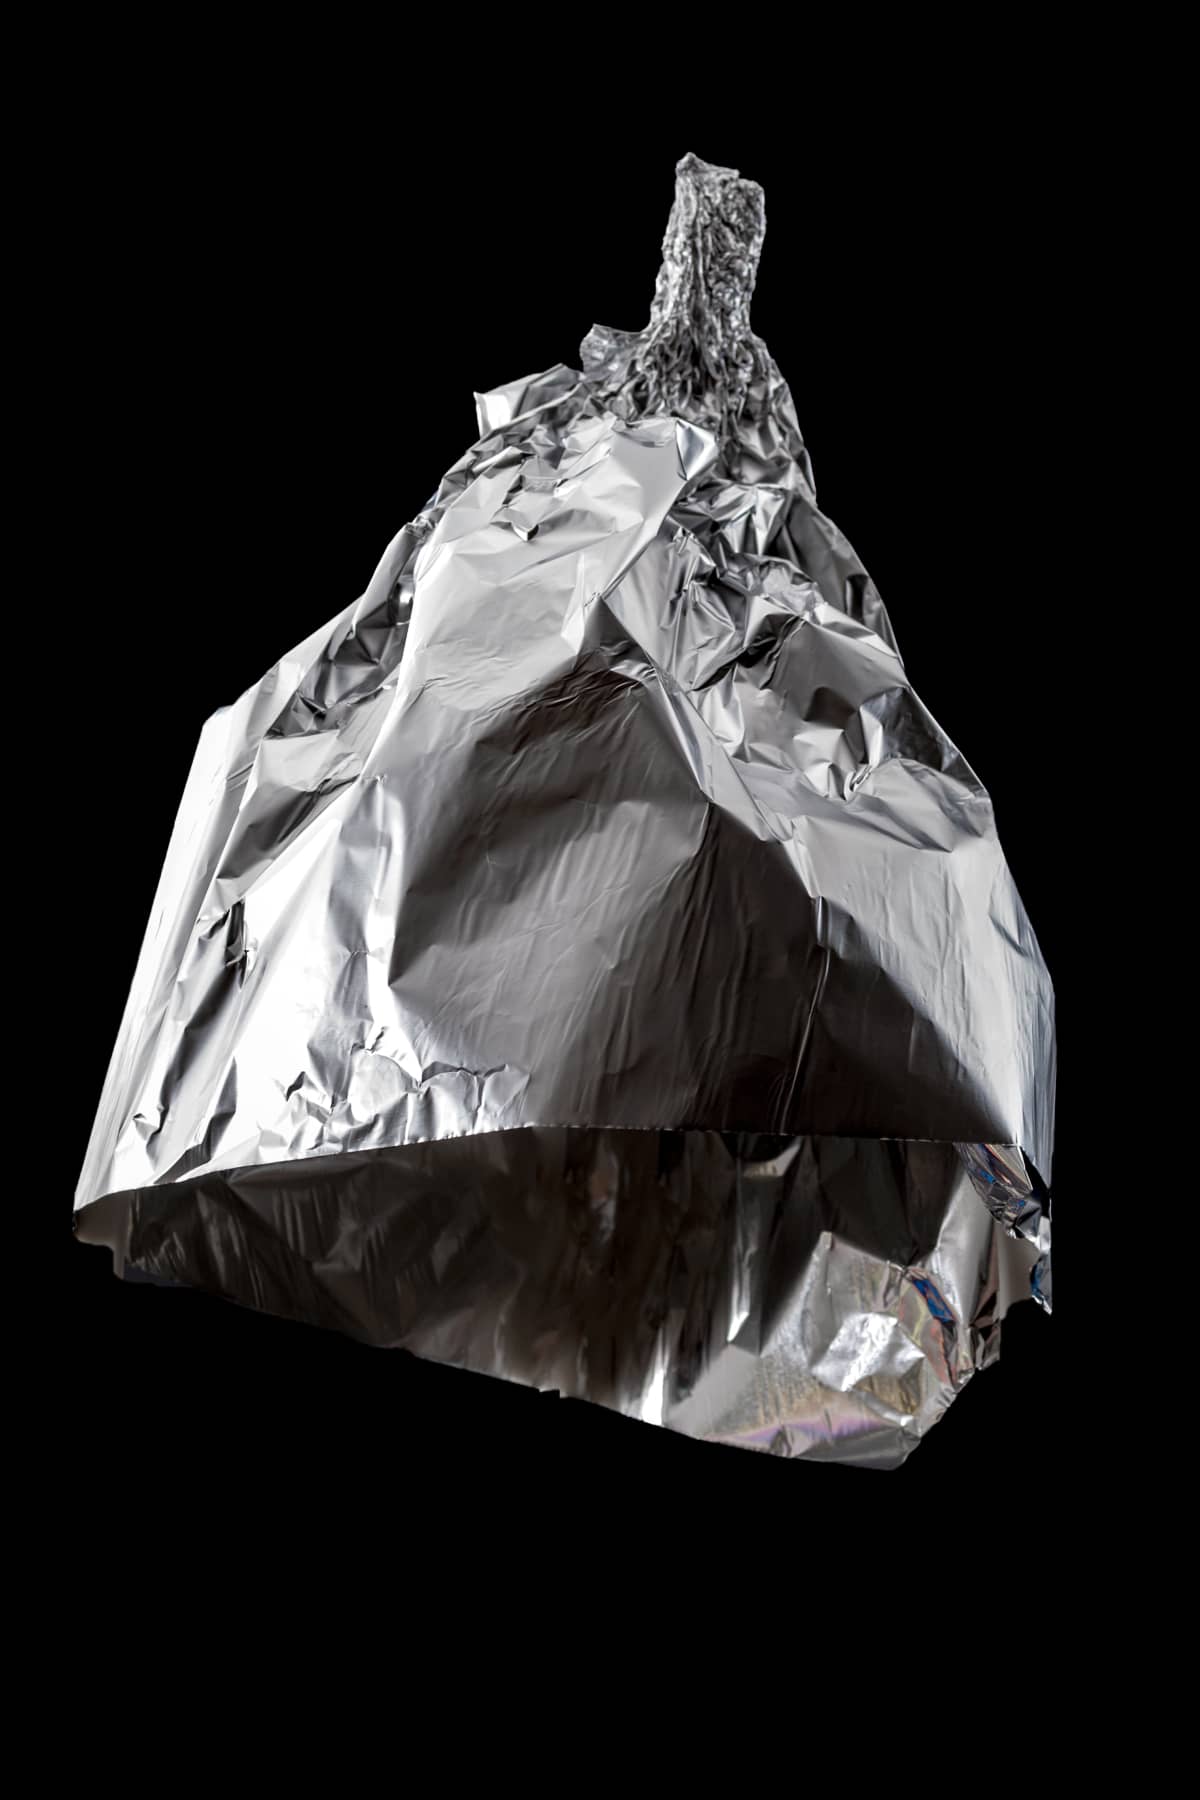 Aluminum foil crumbled into a triangle shape against a black background